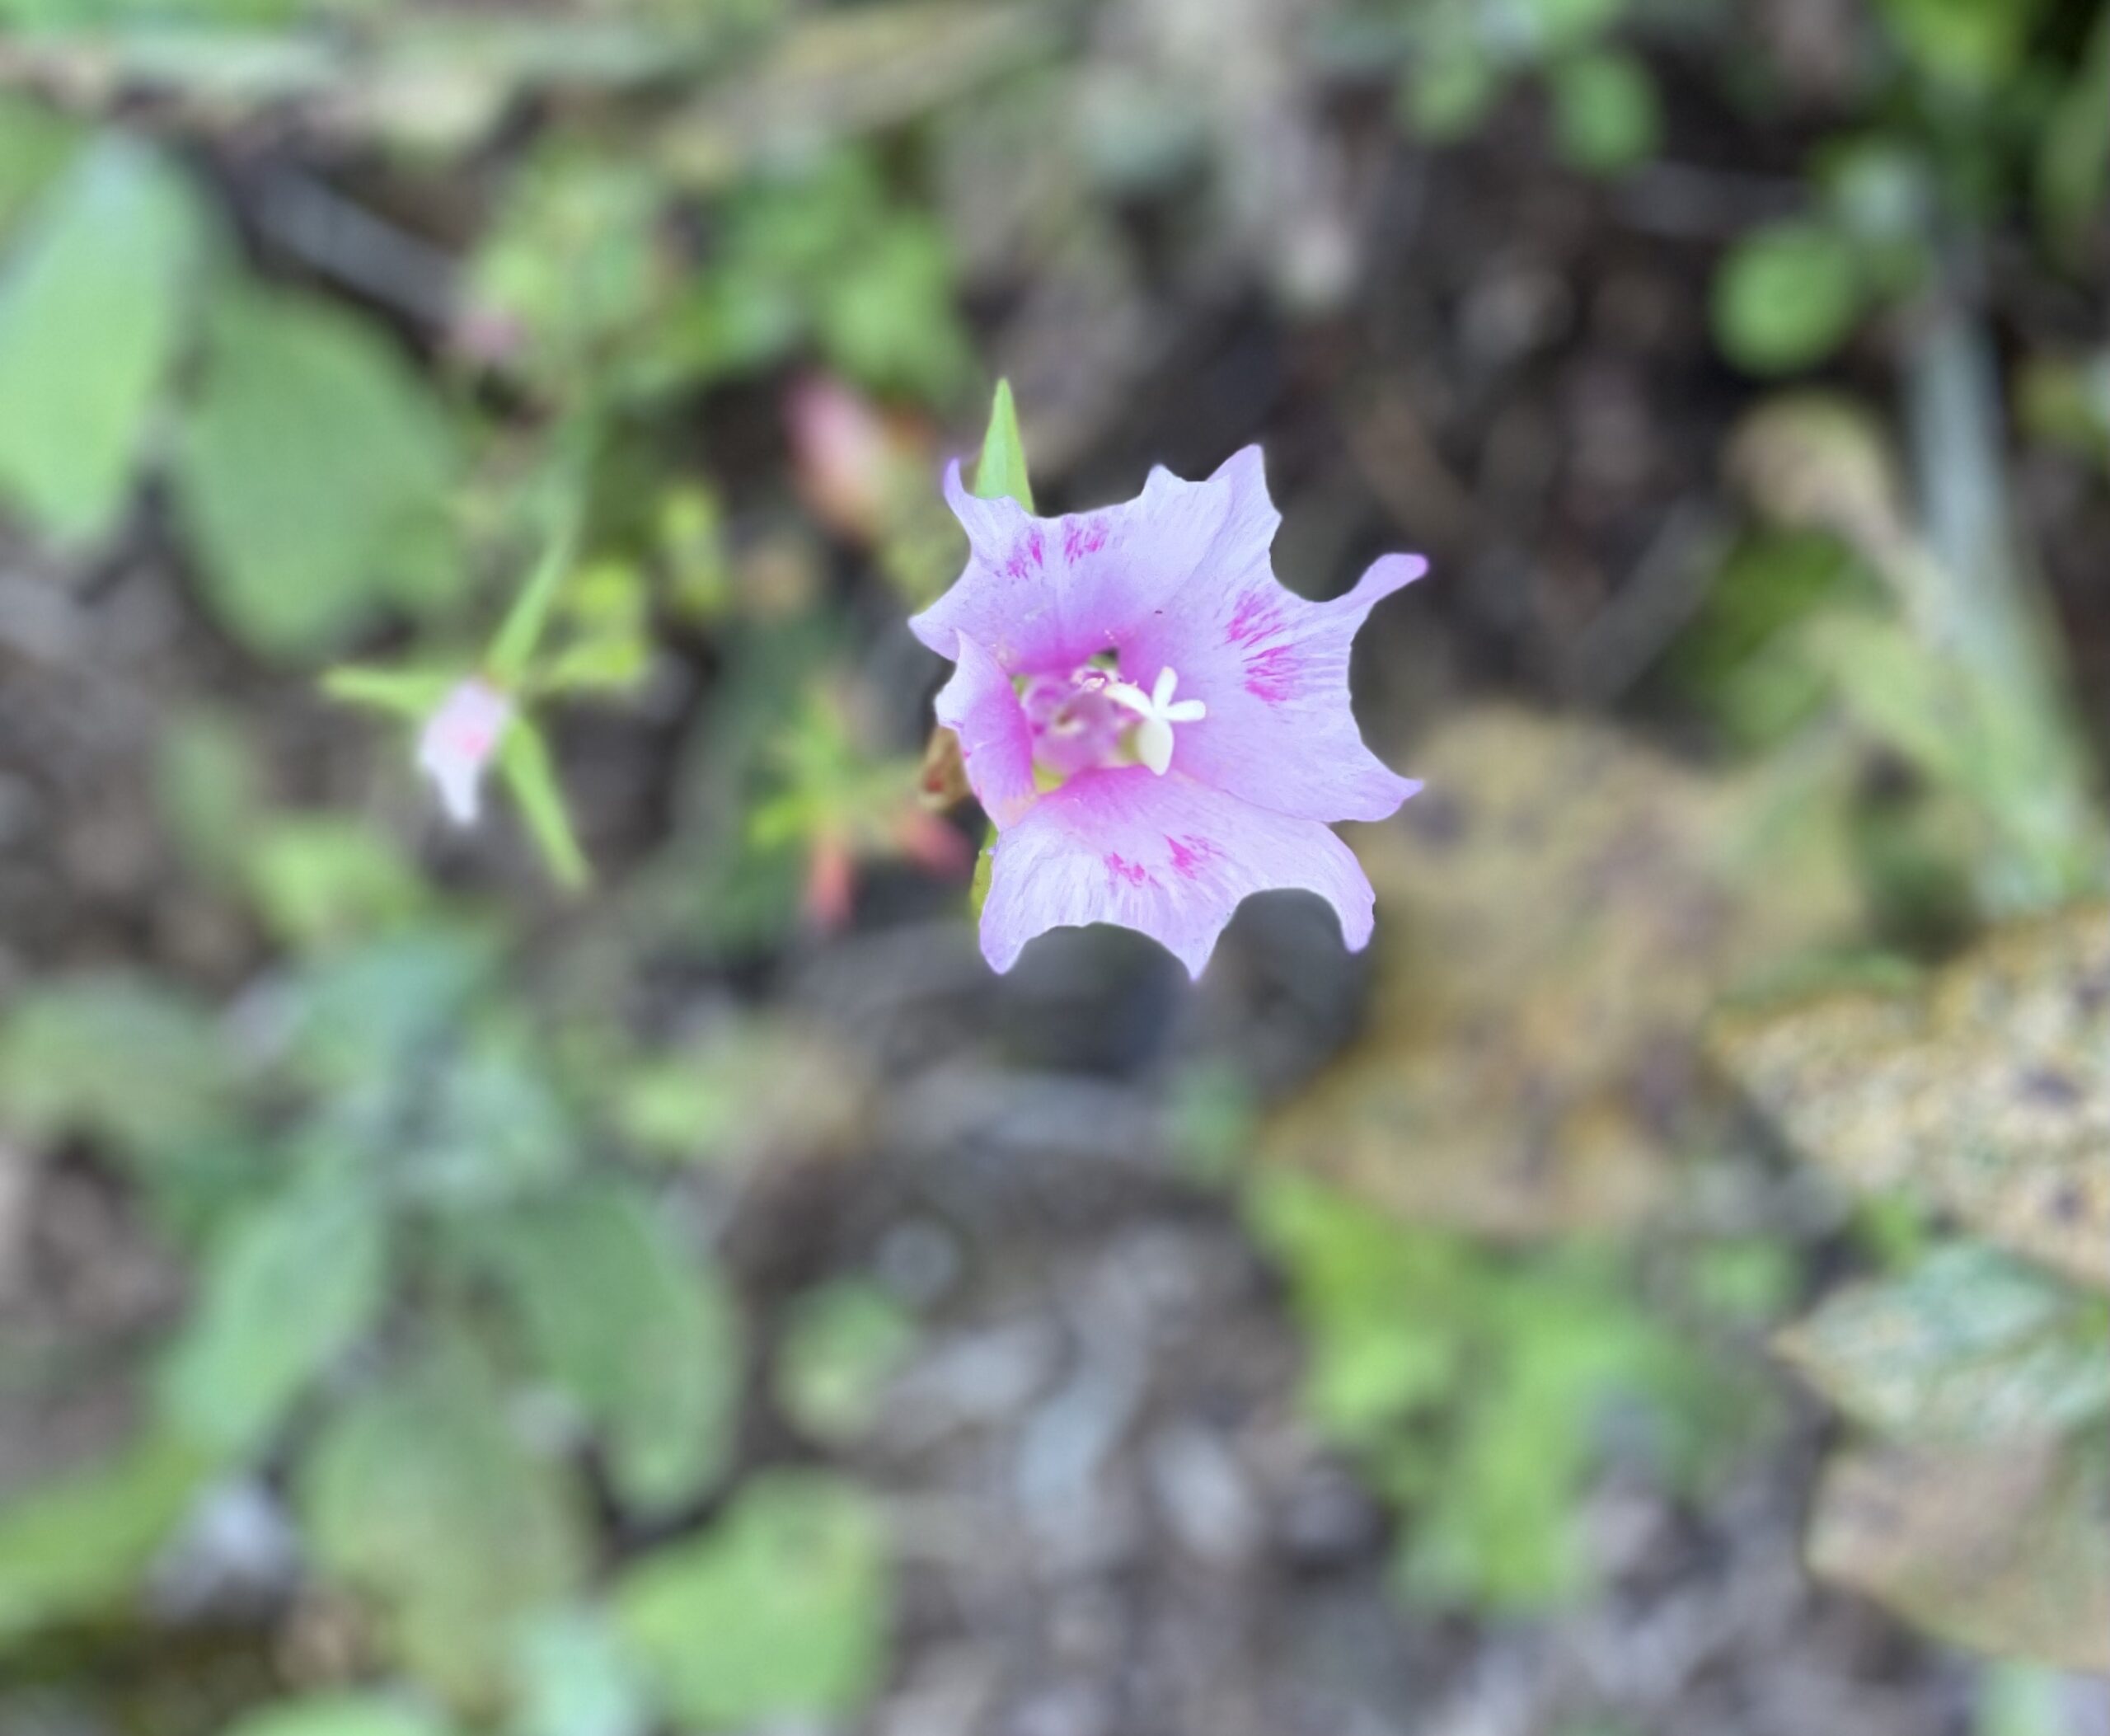 Marshmallow flower in Nicole Apelian's garden